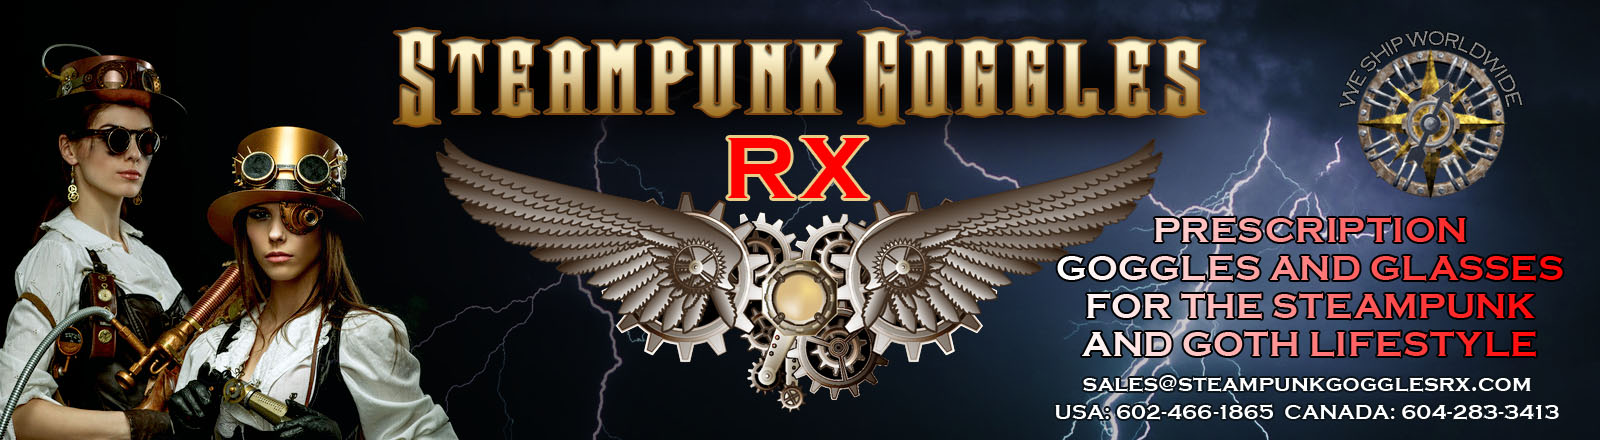 Steampunk Goggles RX